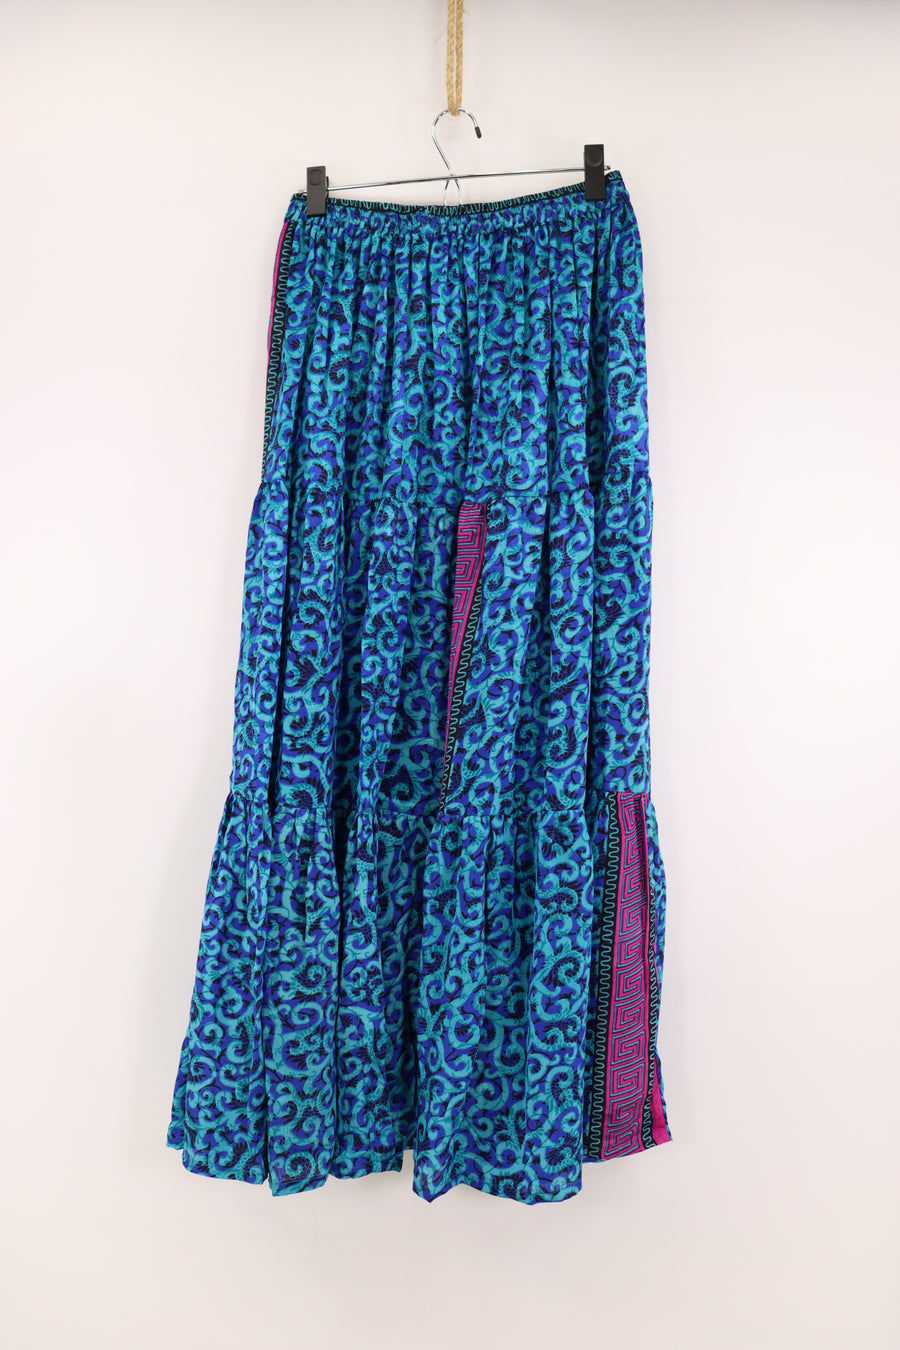 Meadow Skirt S/M 1546